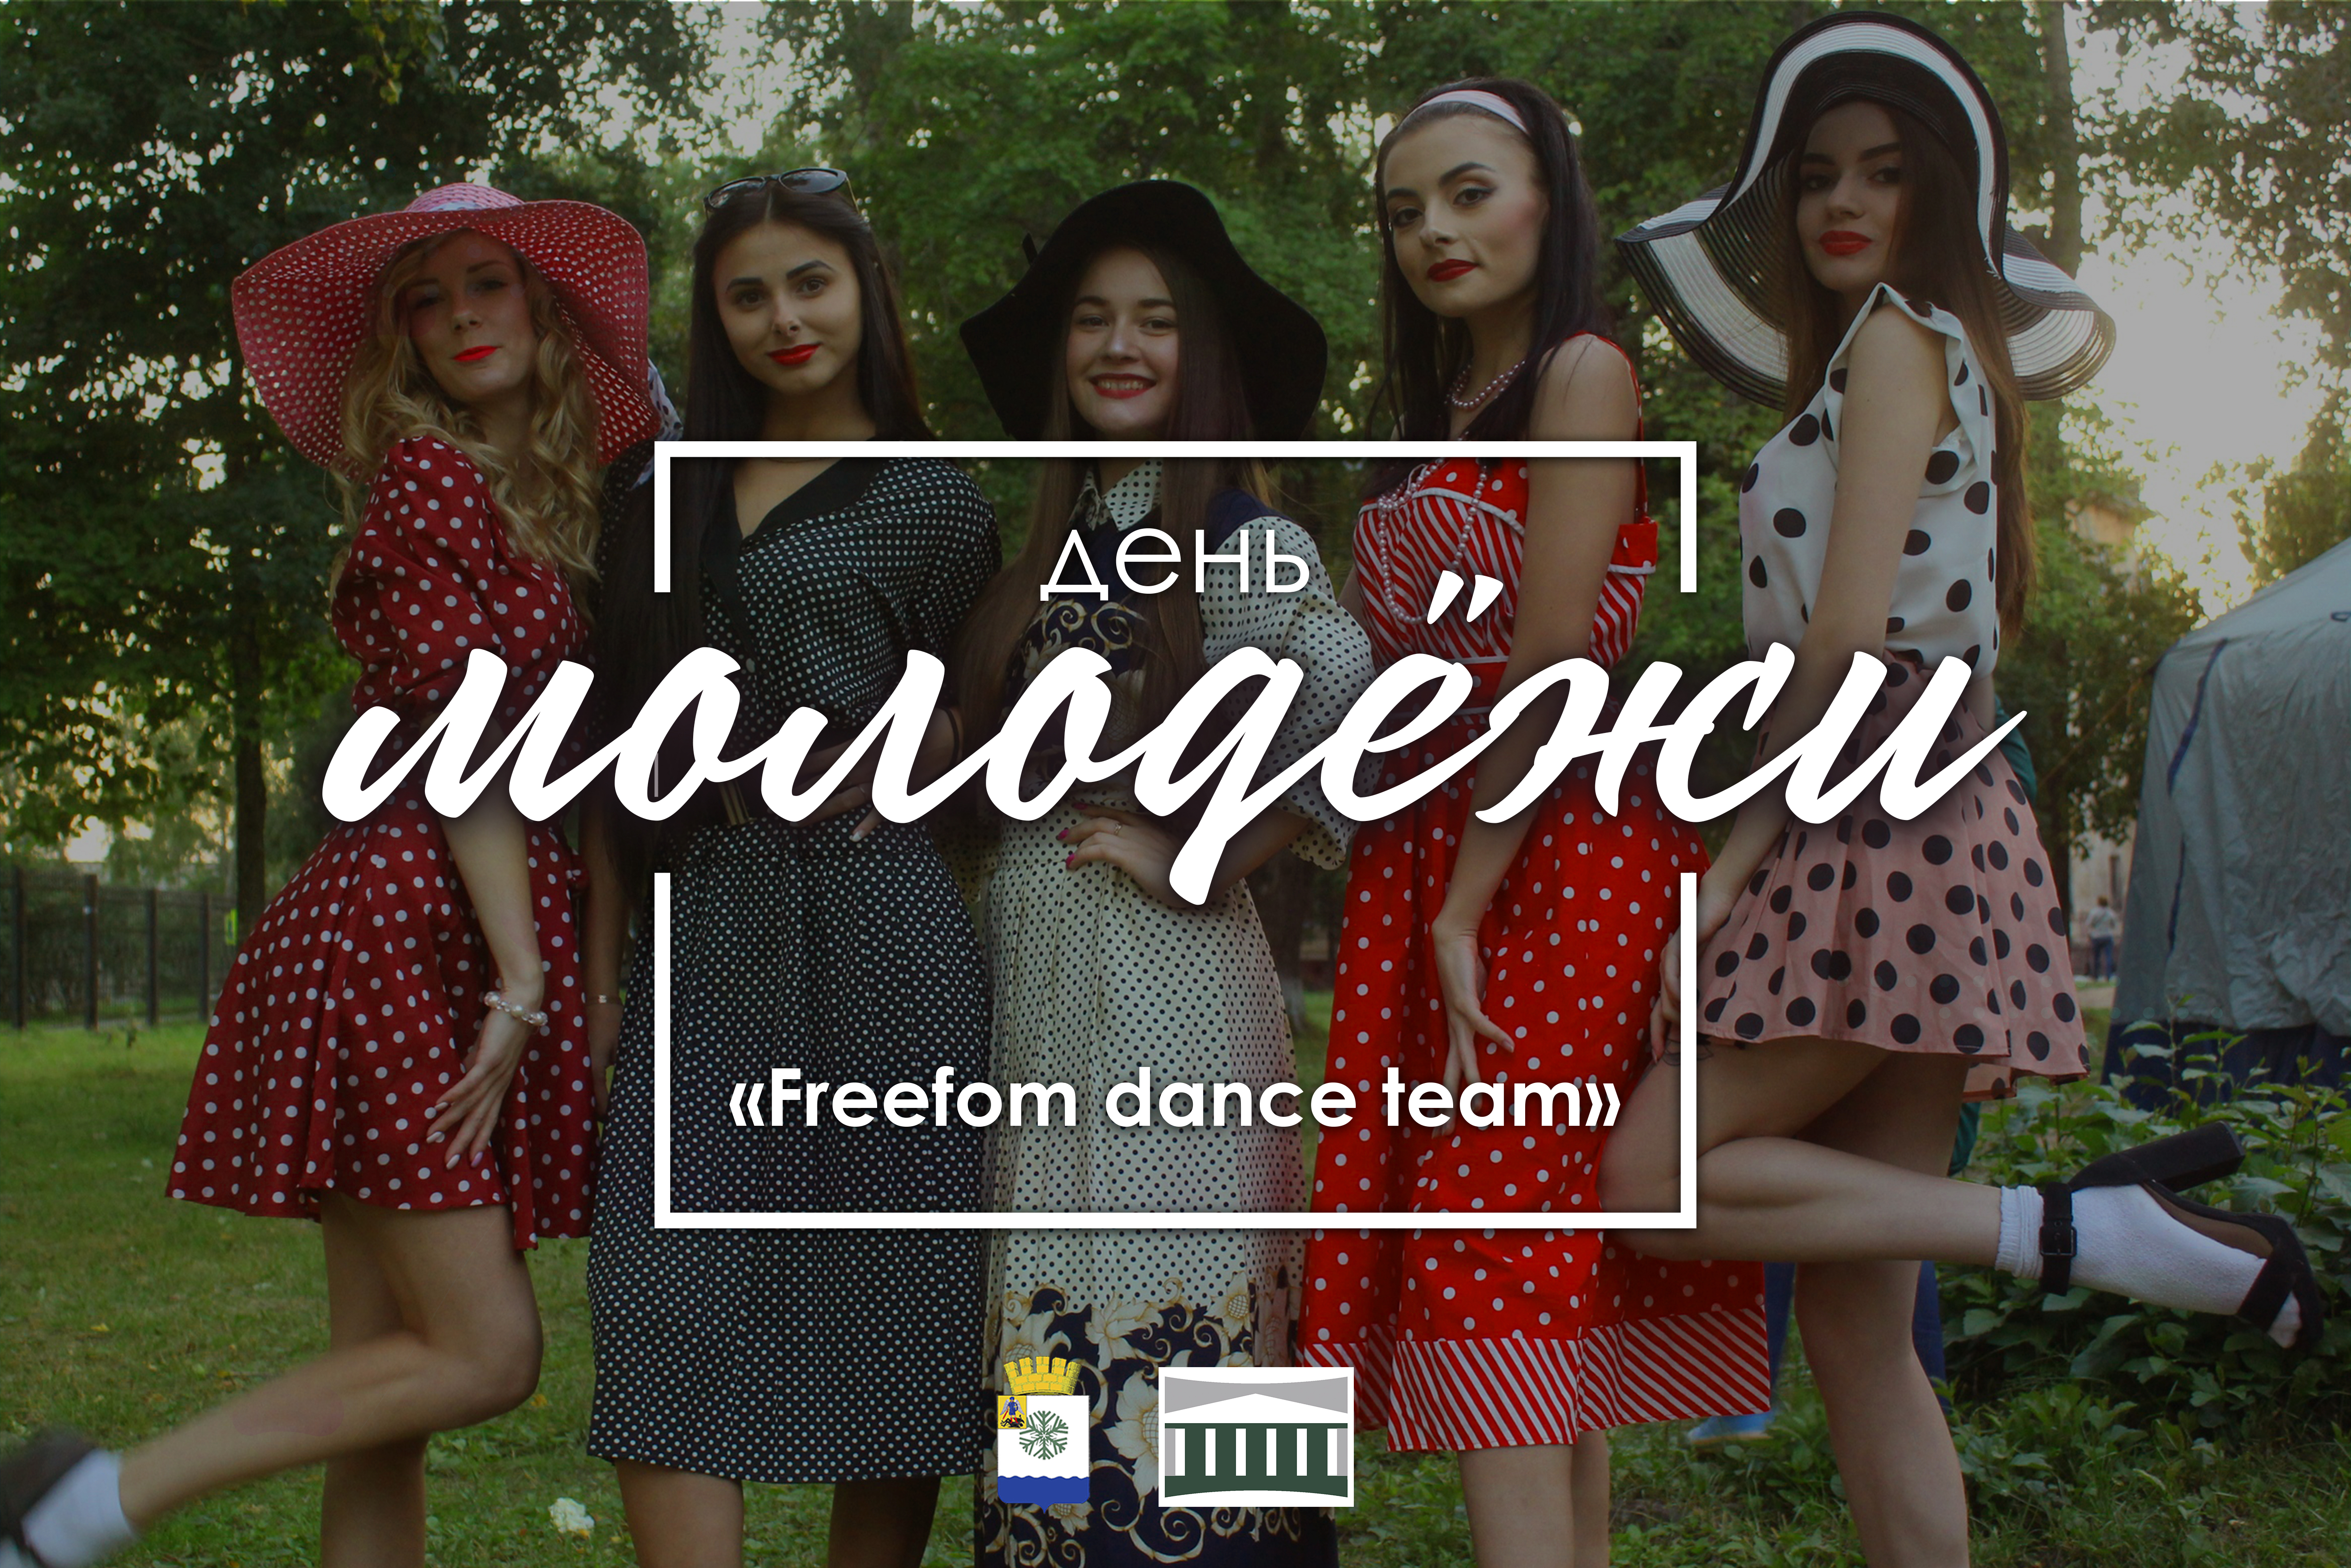 Freedom dance team 